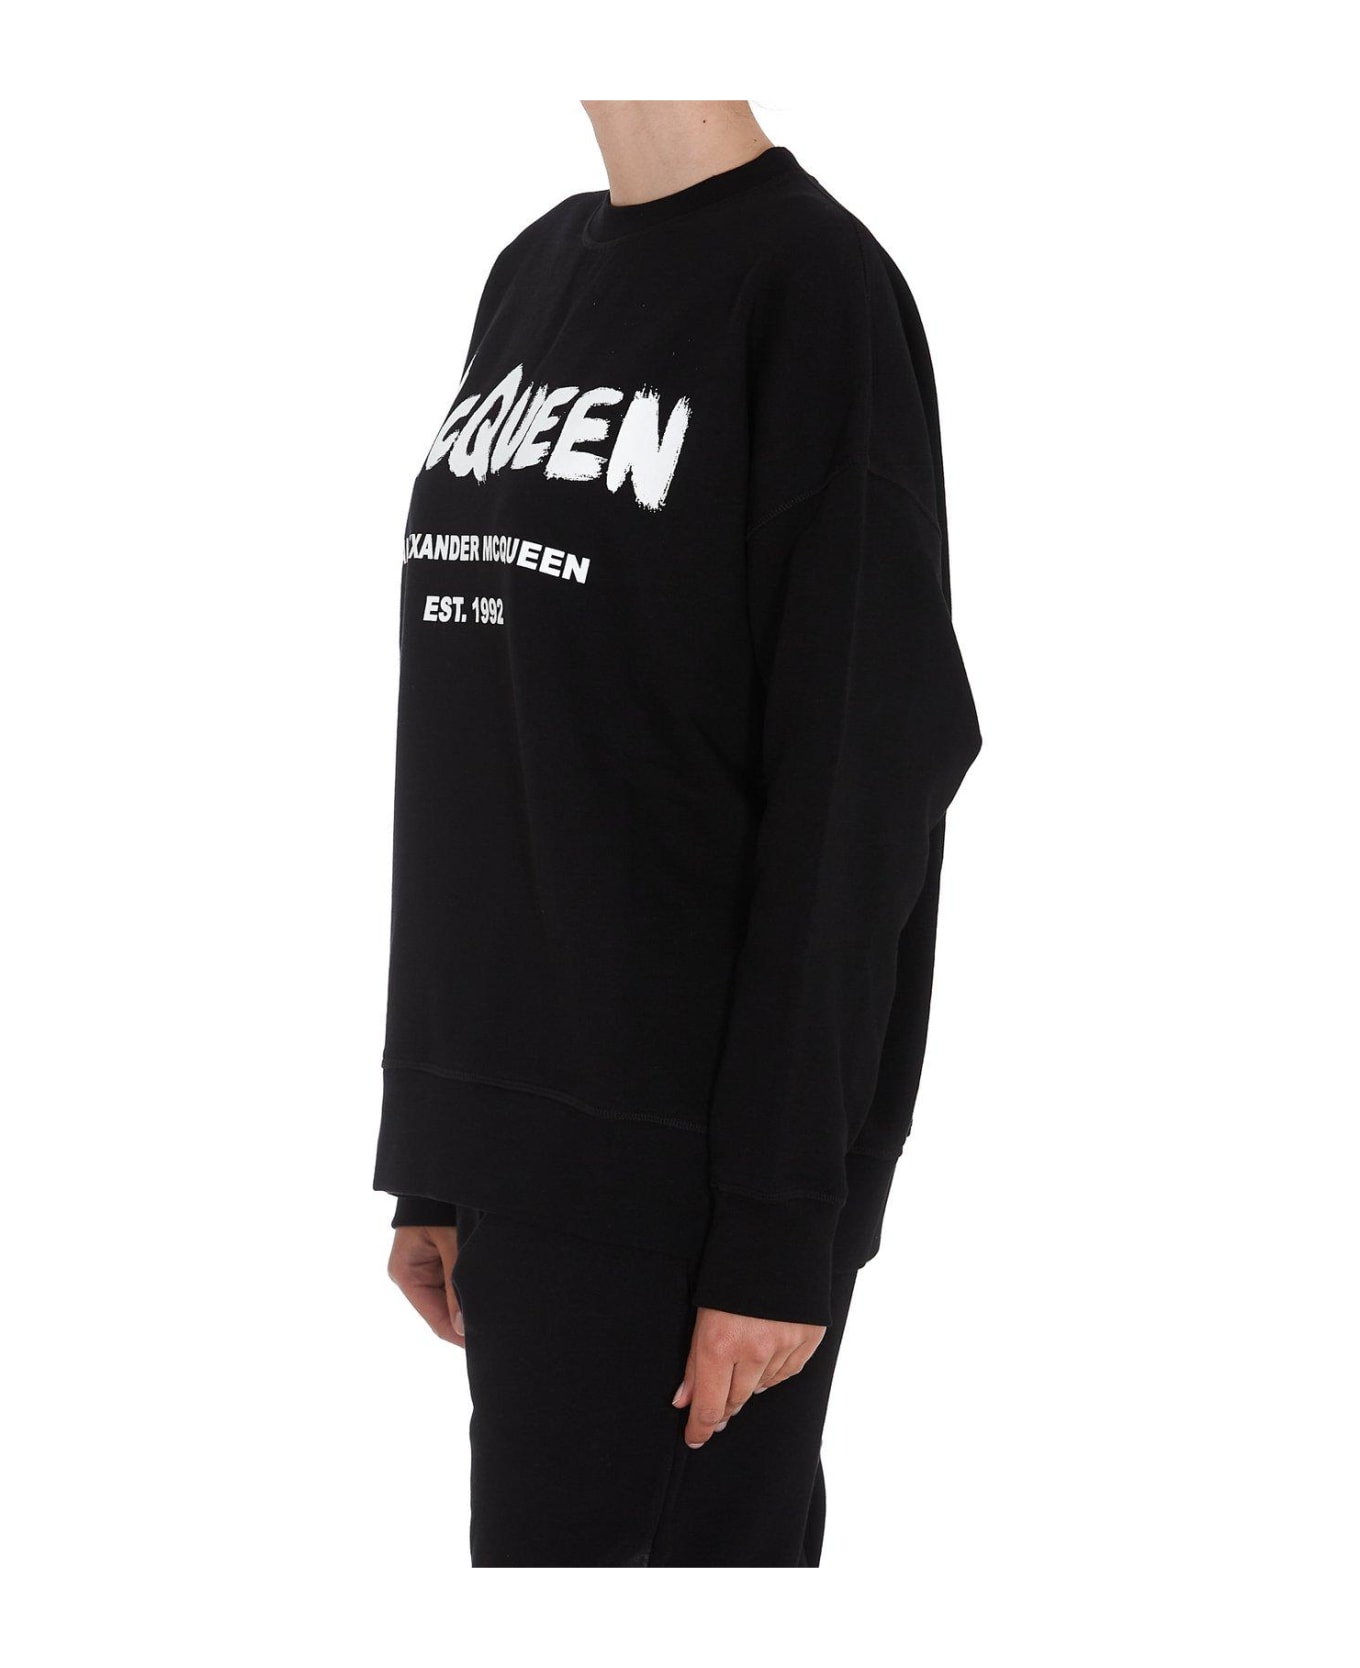 Alexander McQueen Graffiti Printed Sweatshirt - black